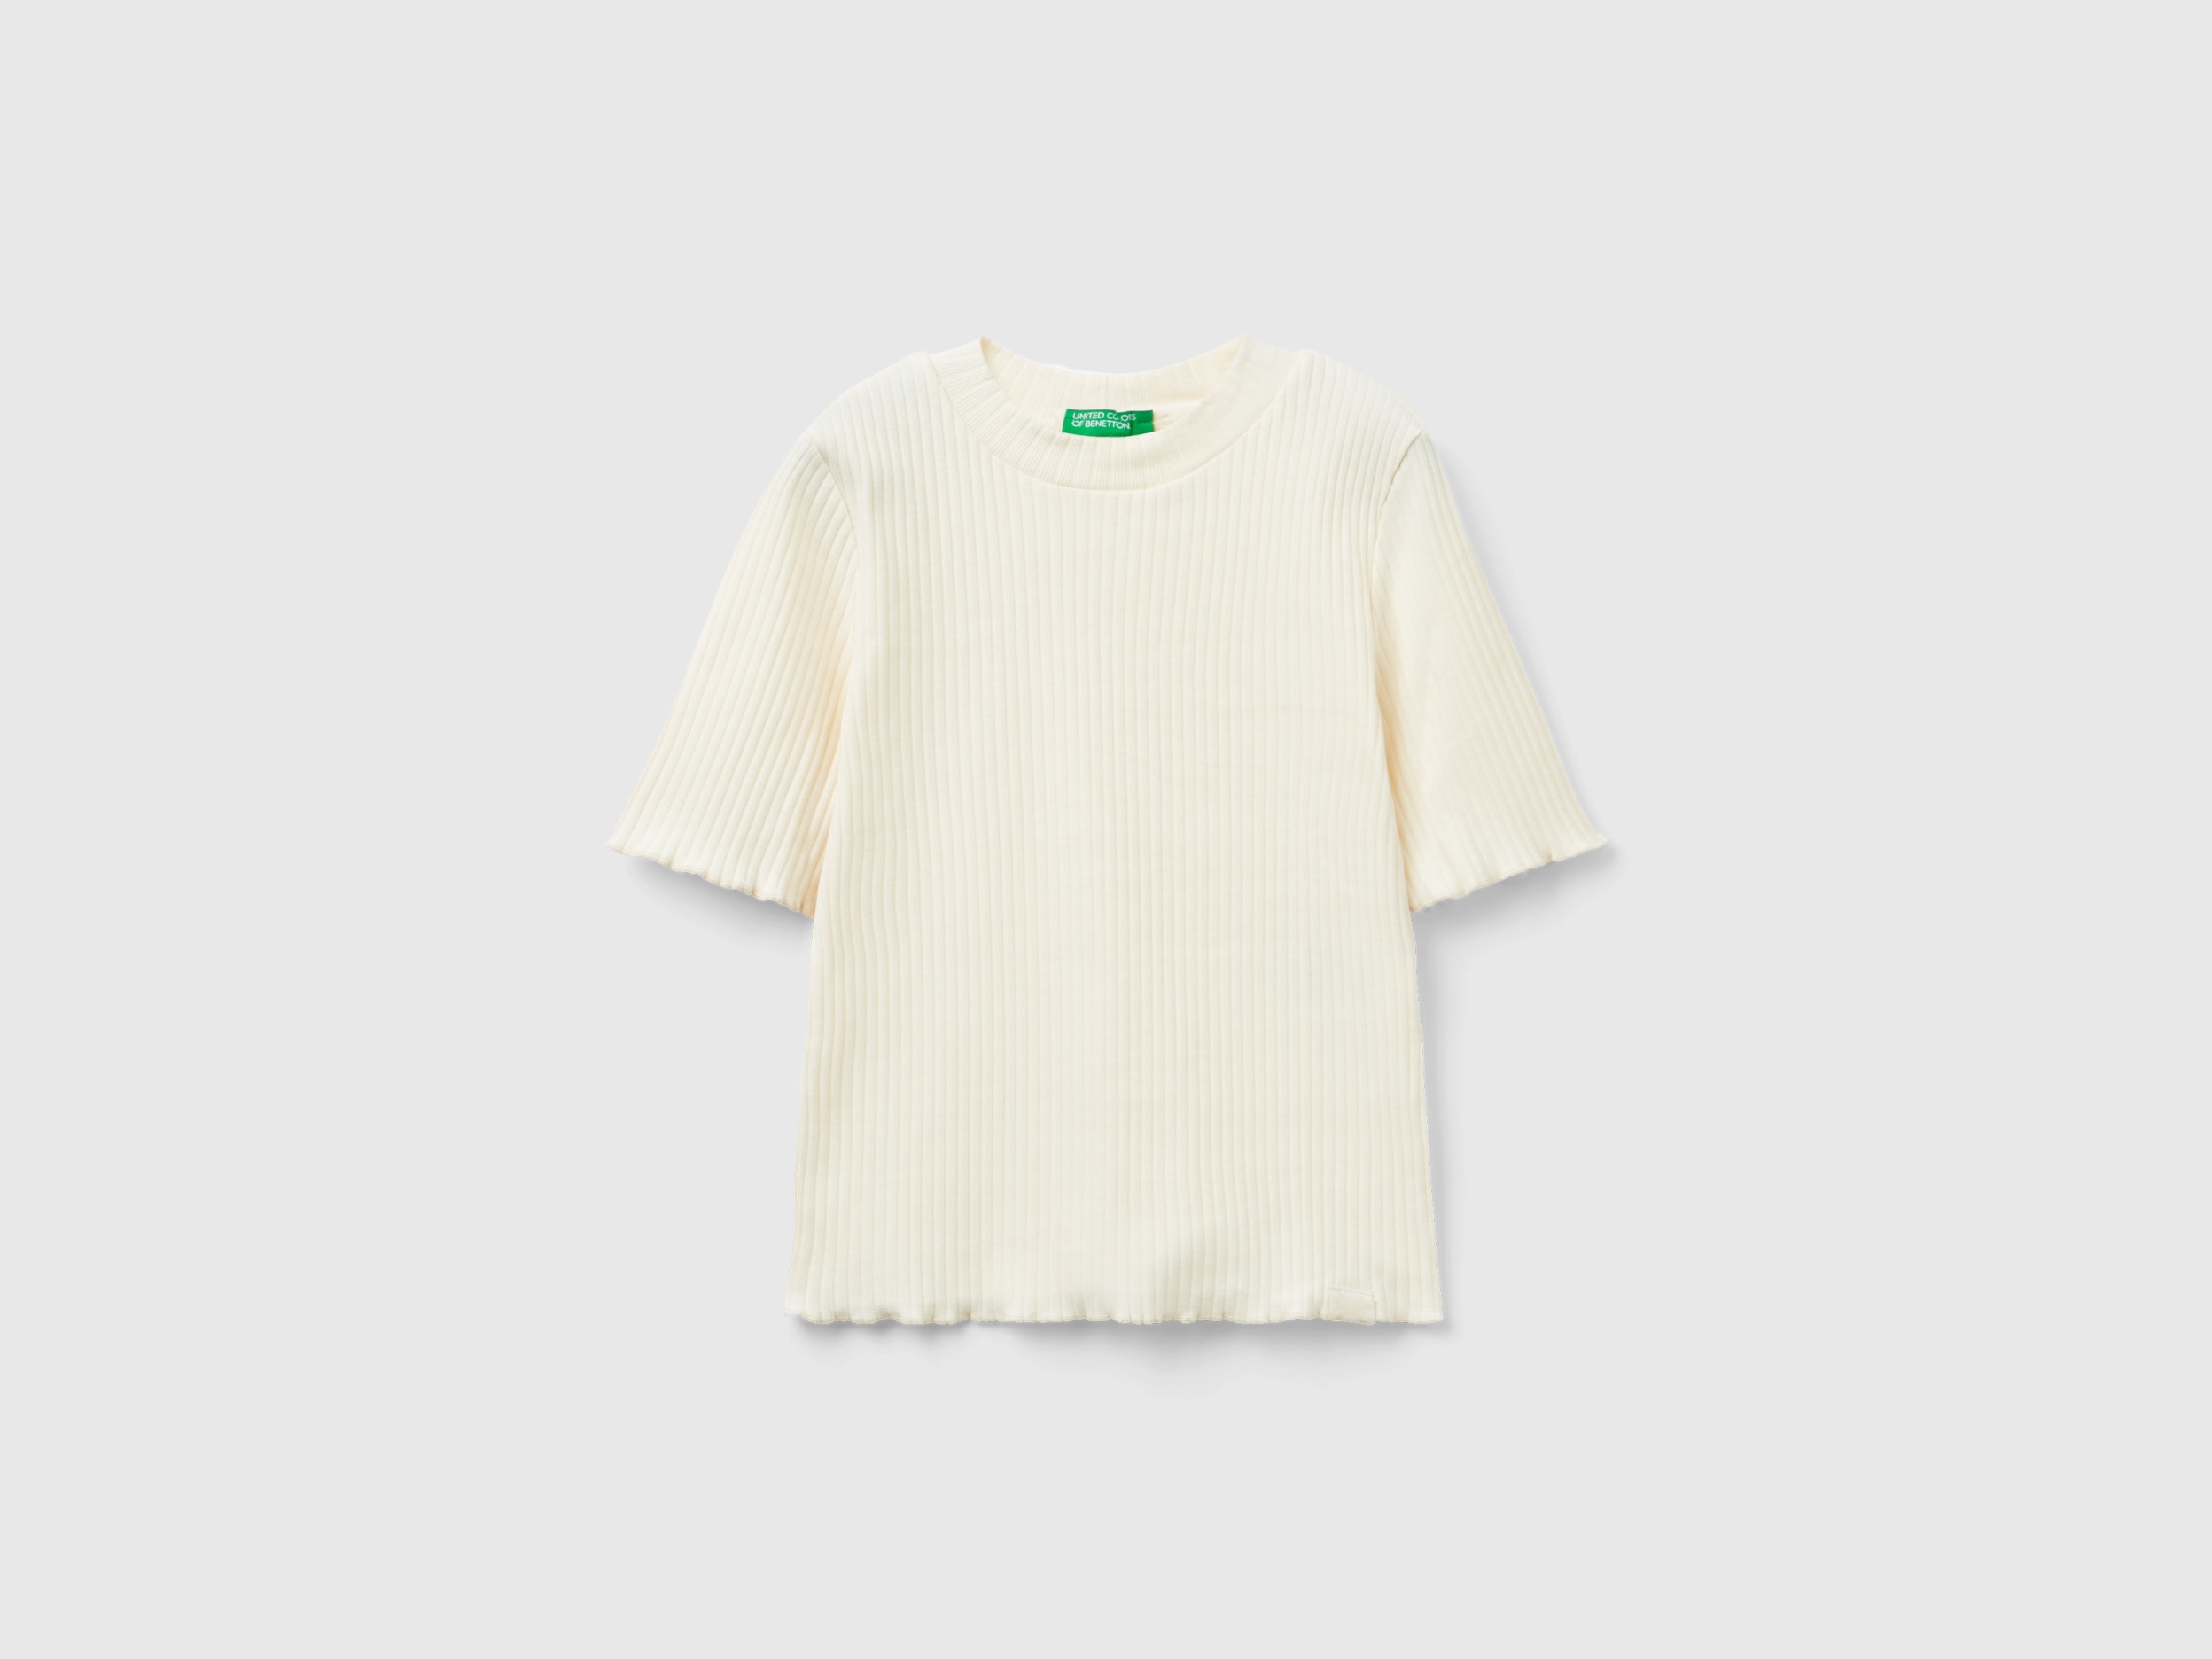 Benetton, Short Sleeve Turtleneck T-shirt, size S, Creamy White, Kids